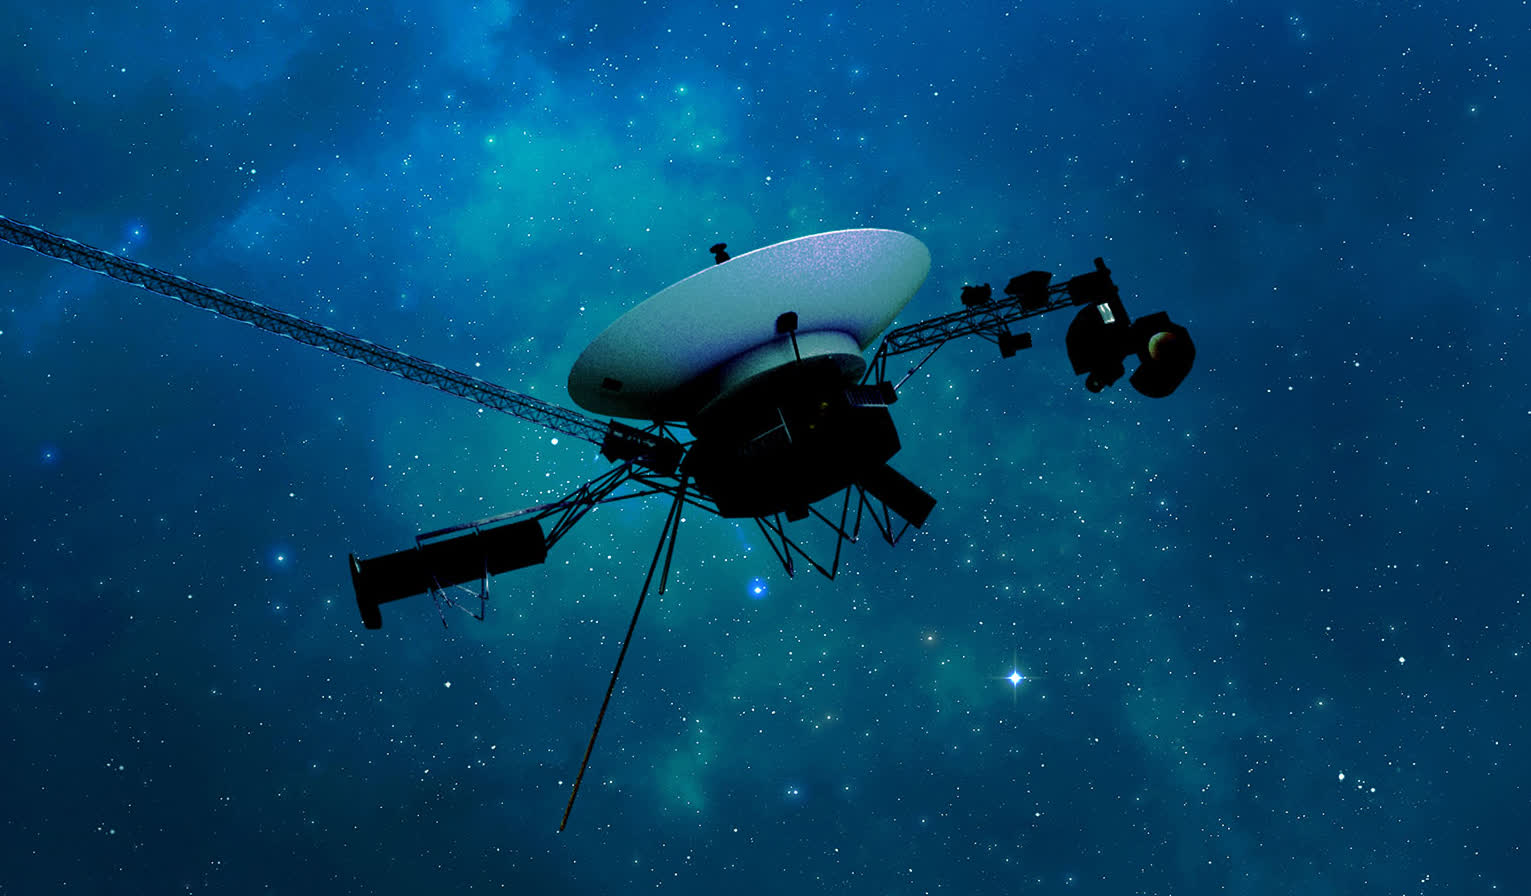 Long-distance maintenance keeps NASA's Voyager probes alive in interstellar space